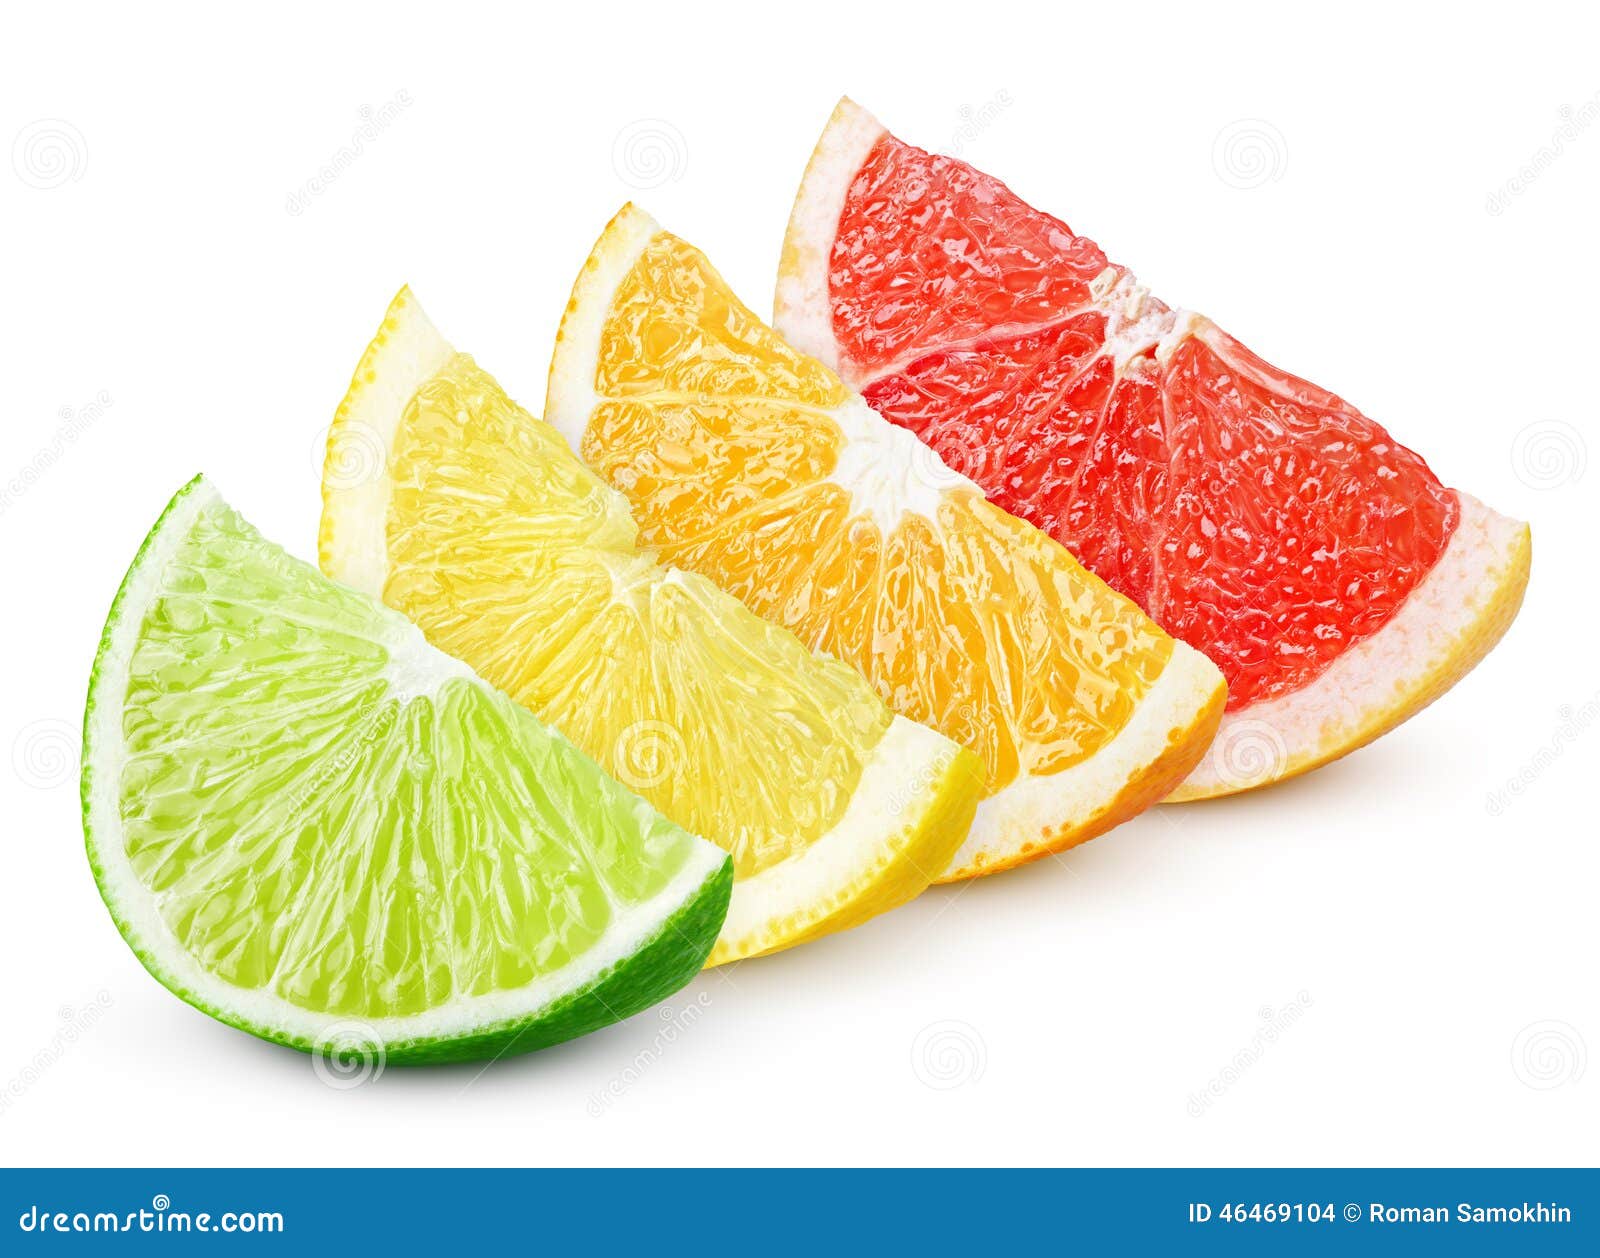 sliced citrus fruit - lime, lemon, orange and grapefruit